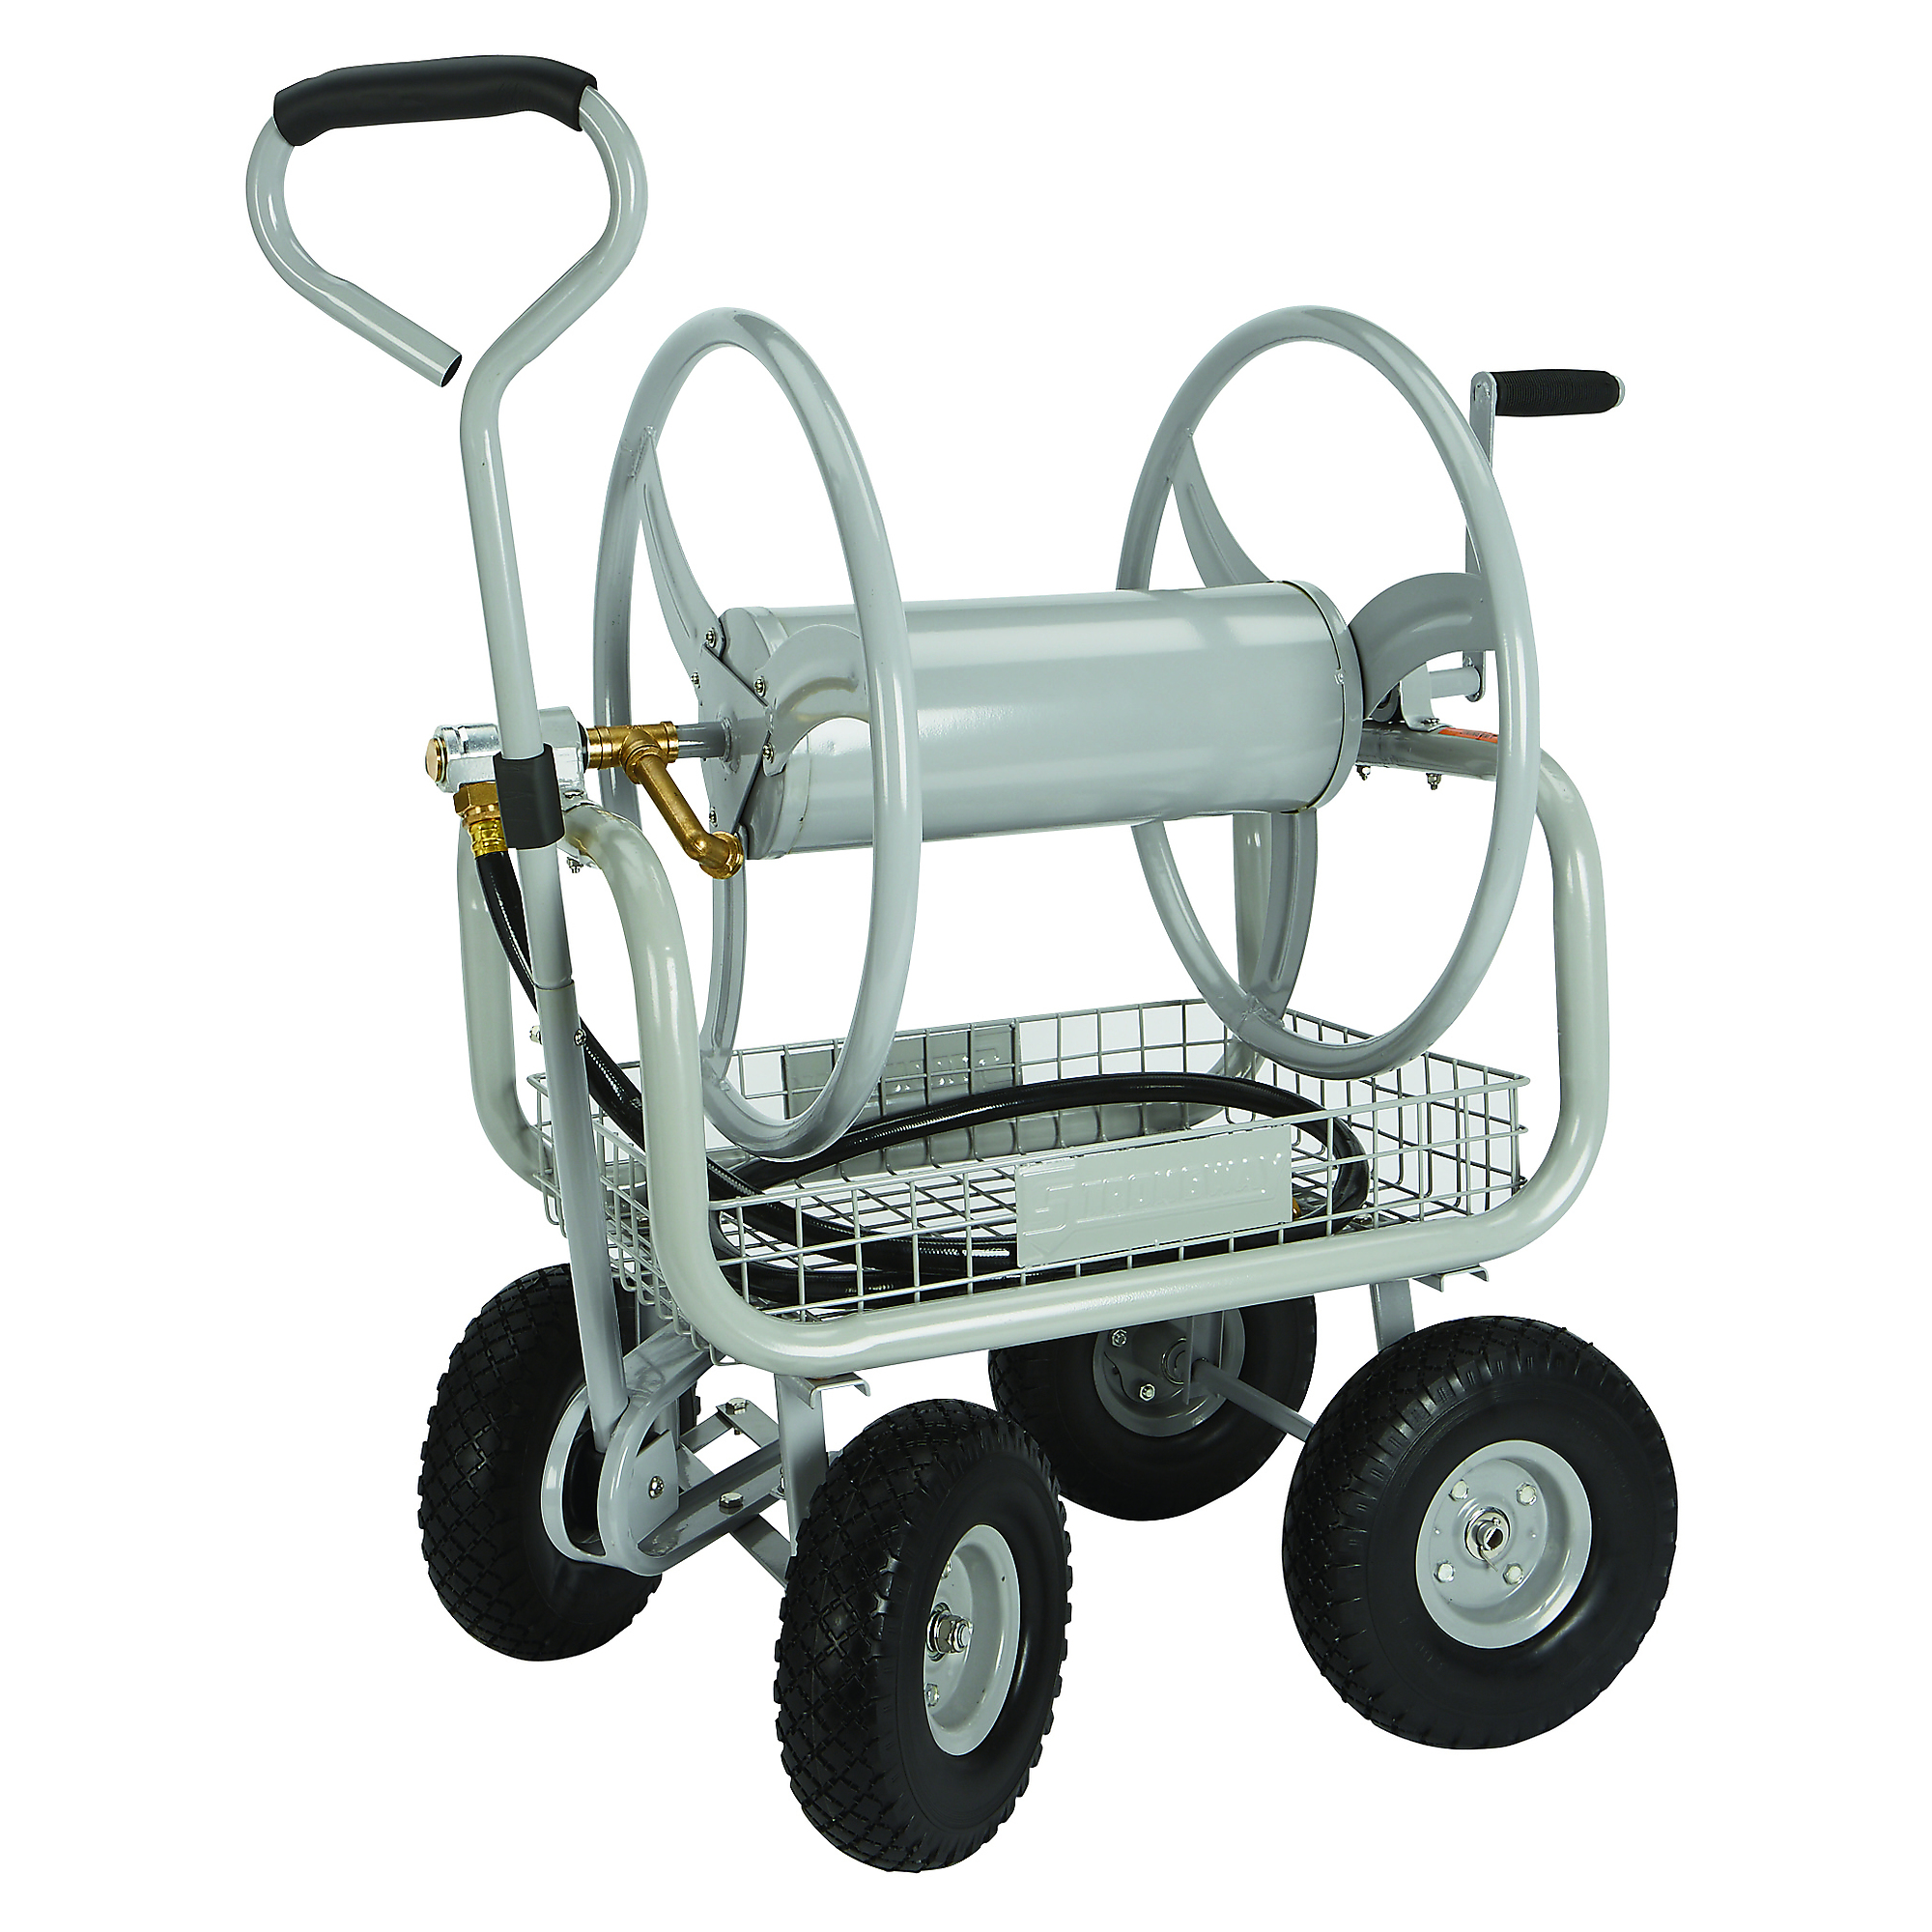 Strongway Garden Hose Reel Cart Replacement Parts  Garden Hose Reel Cart  Wheels - Garden Hoses - Aliexpress